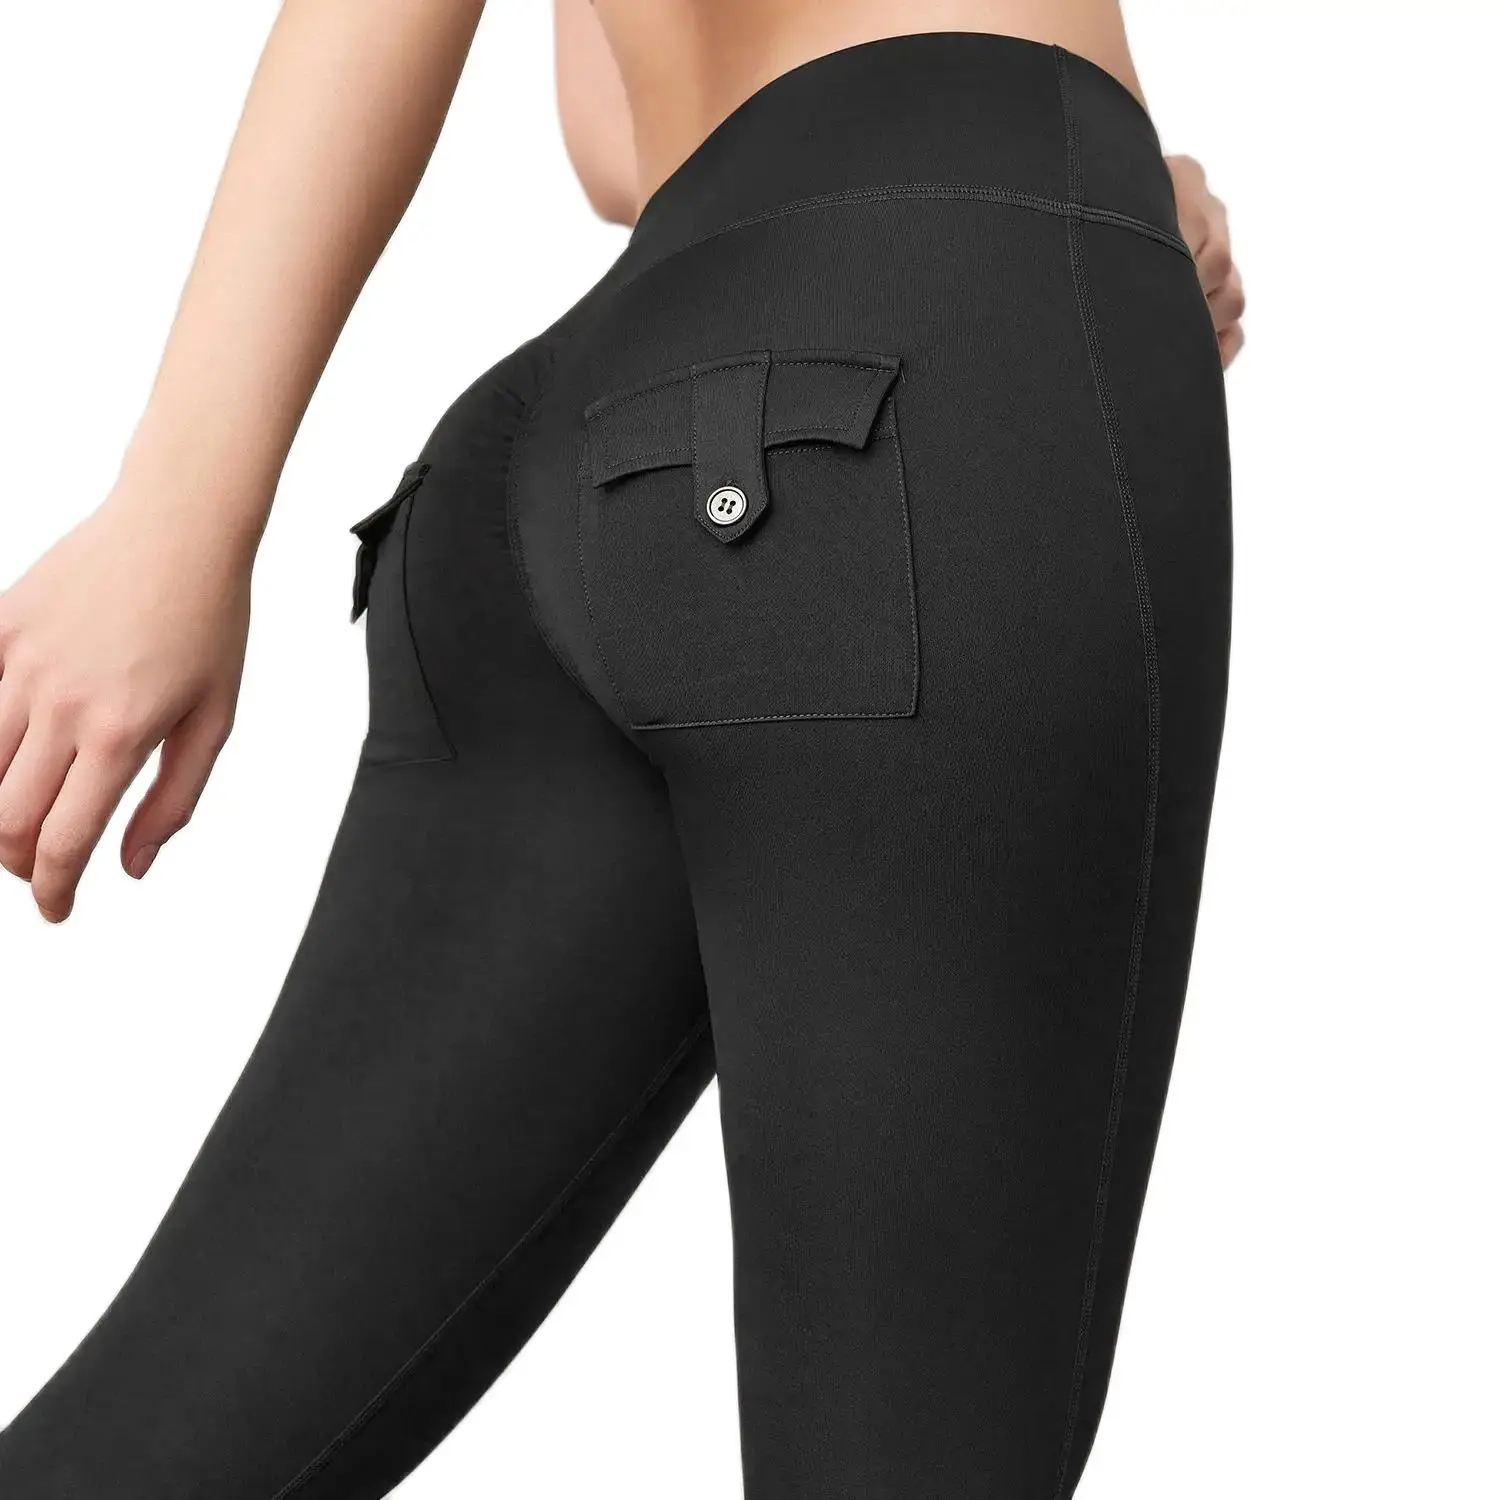 

CHRLEISURE Seamless Pockets Sports Leggings High Waist Butt Lifting Workout Yoga Pants Elastic Slim Ruched Tights Sportswear